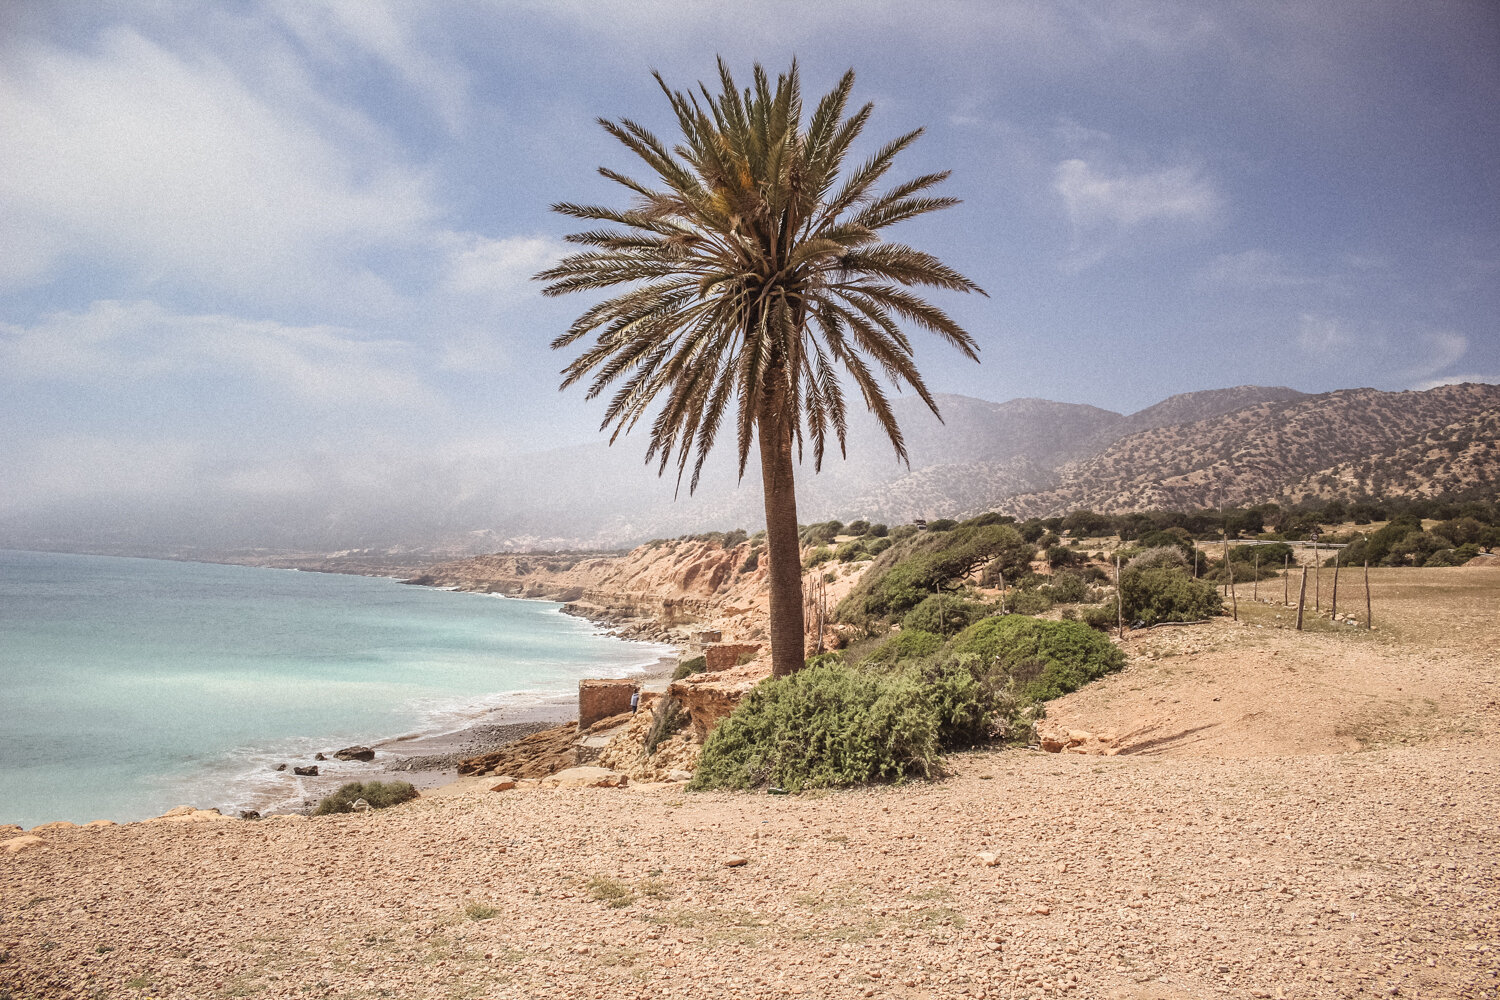 2014.05.01 - Agadir - Location Scouting (Nina Canon 60D) 10- LR (JPG 1500px 72DPI).jpg